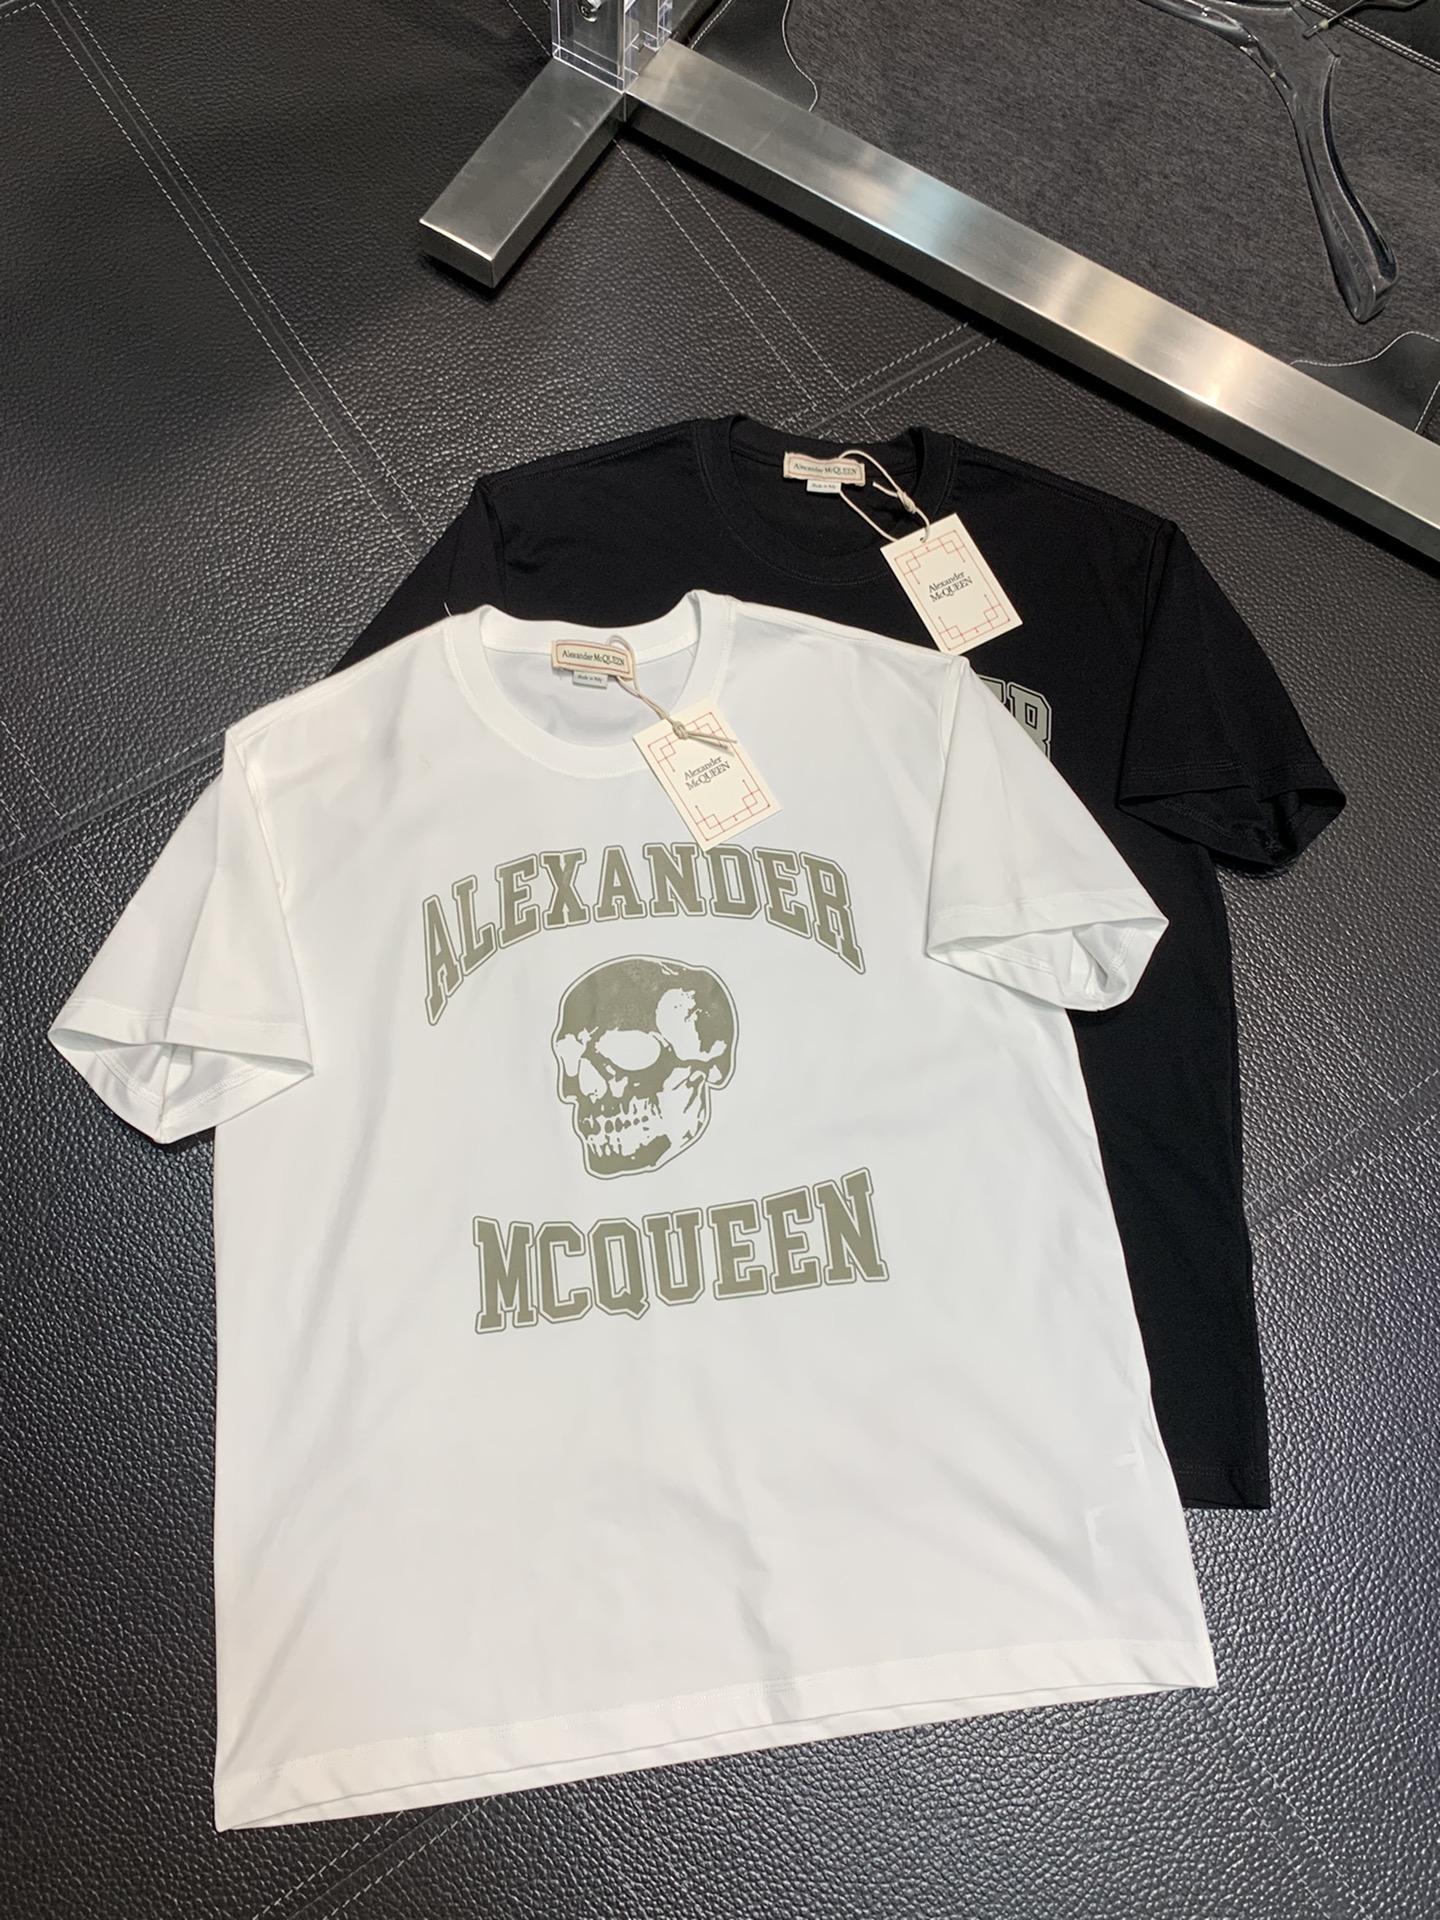 Alexander McQueen Clothing T-Shirt Men Fashion Short Sleeve